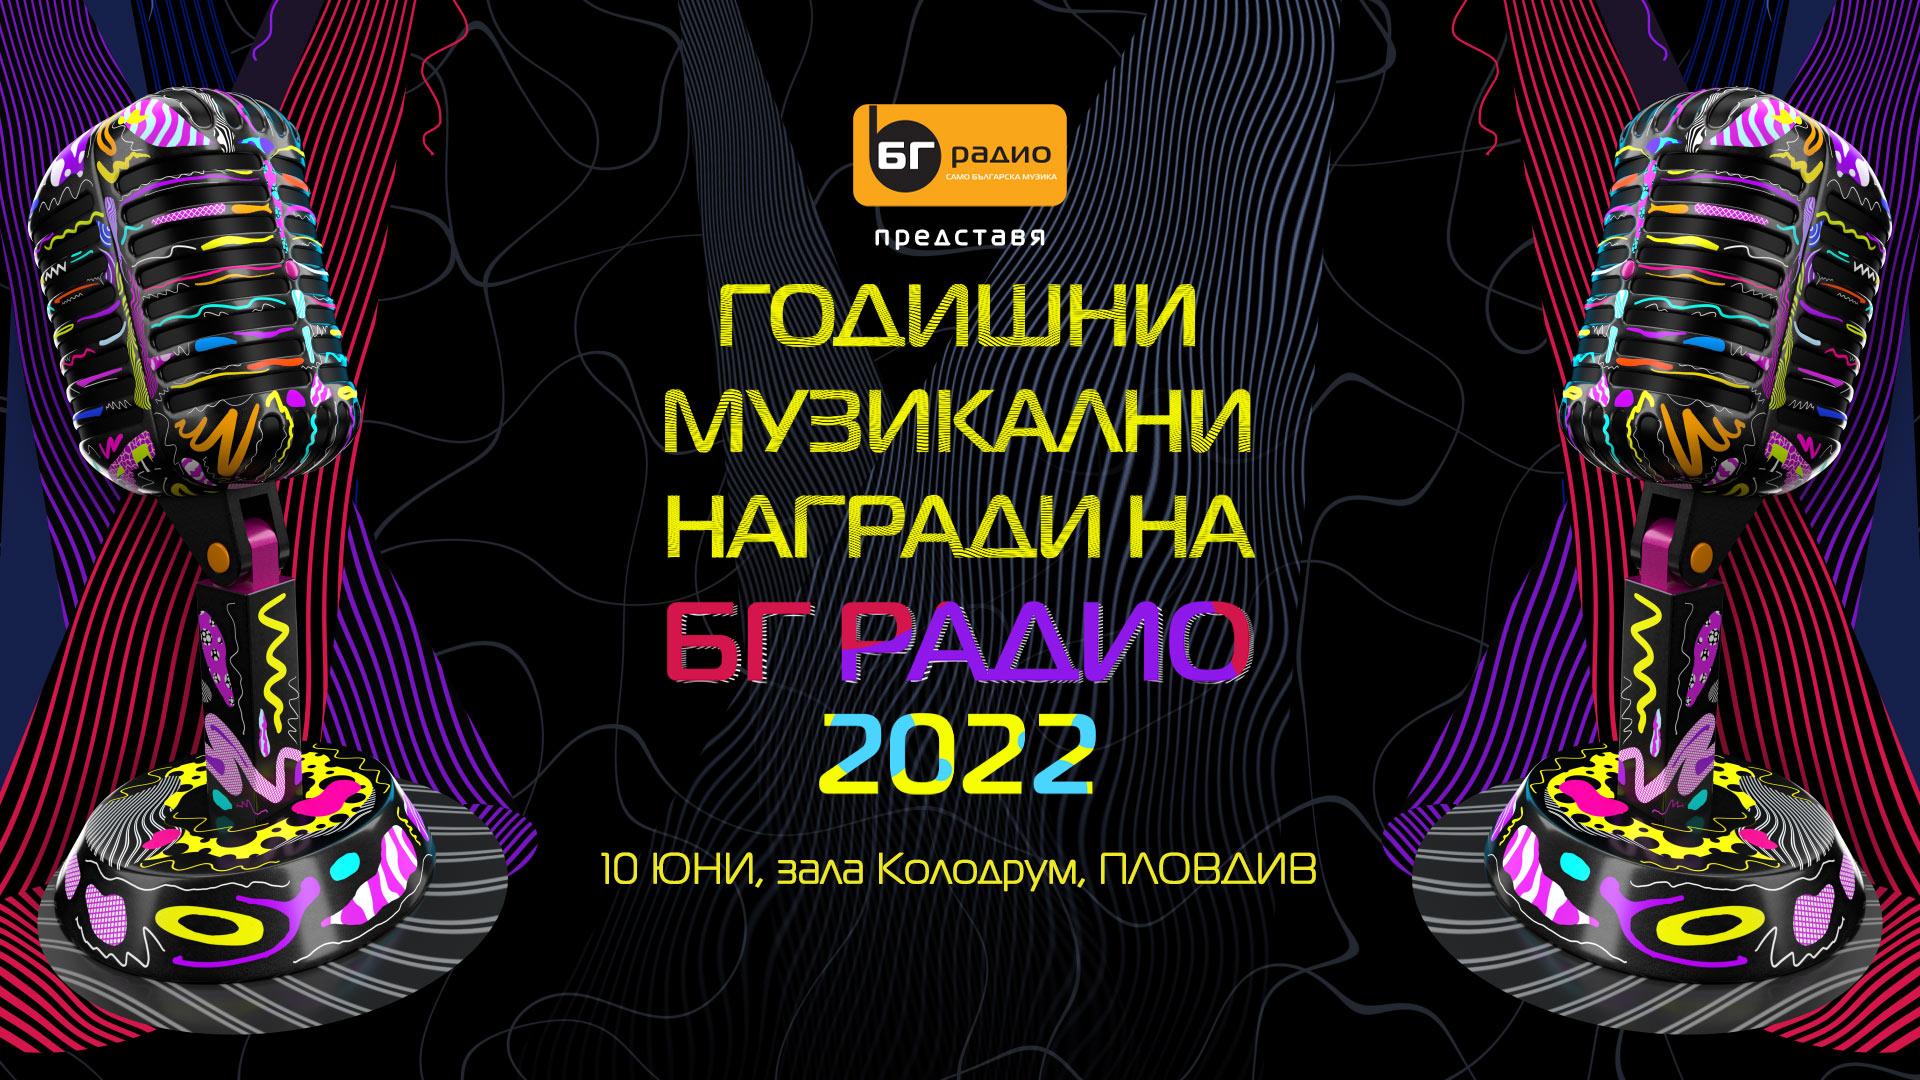 Annual Music Awards 2022 of BG RADIO in Plovdiv - nominations